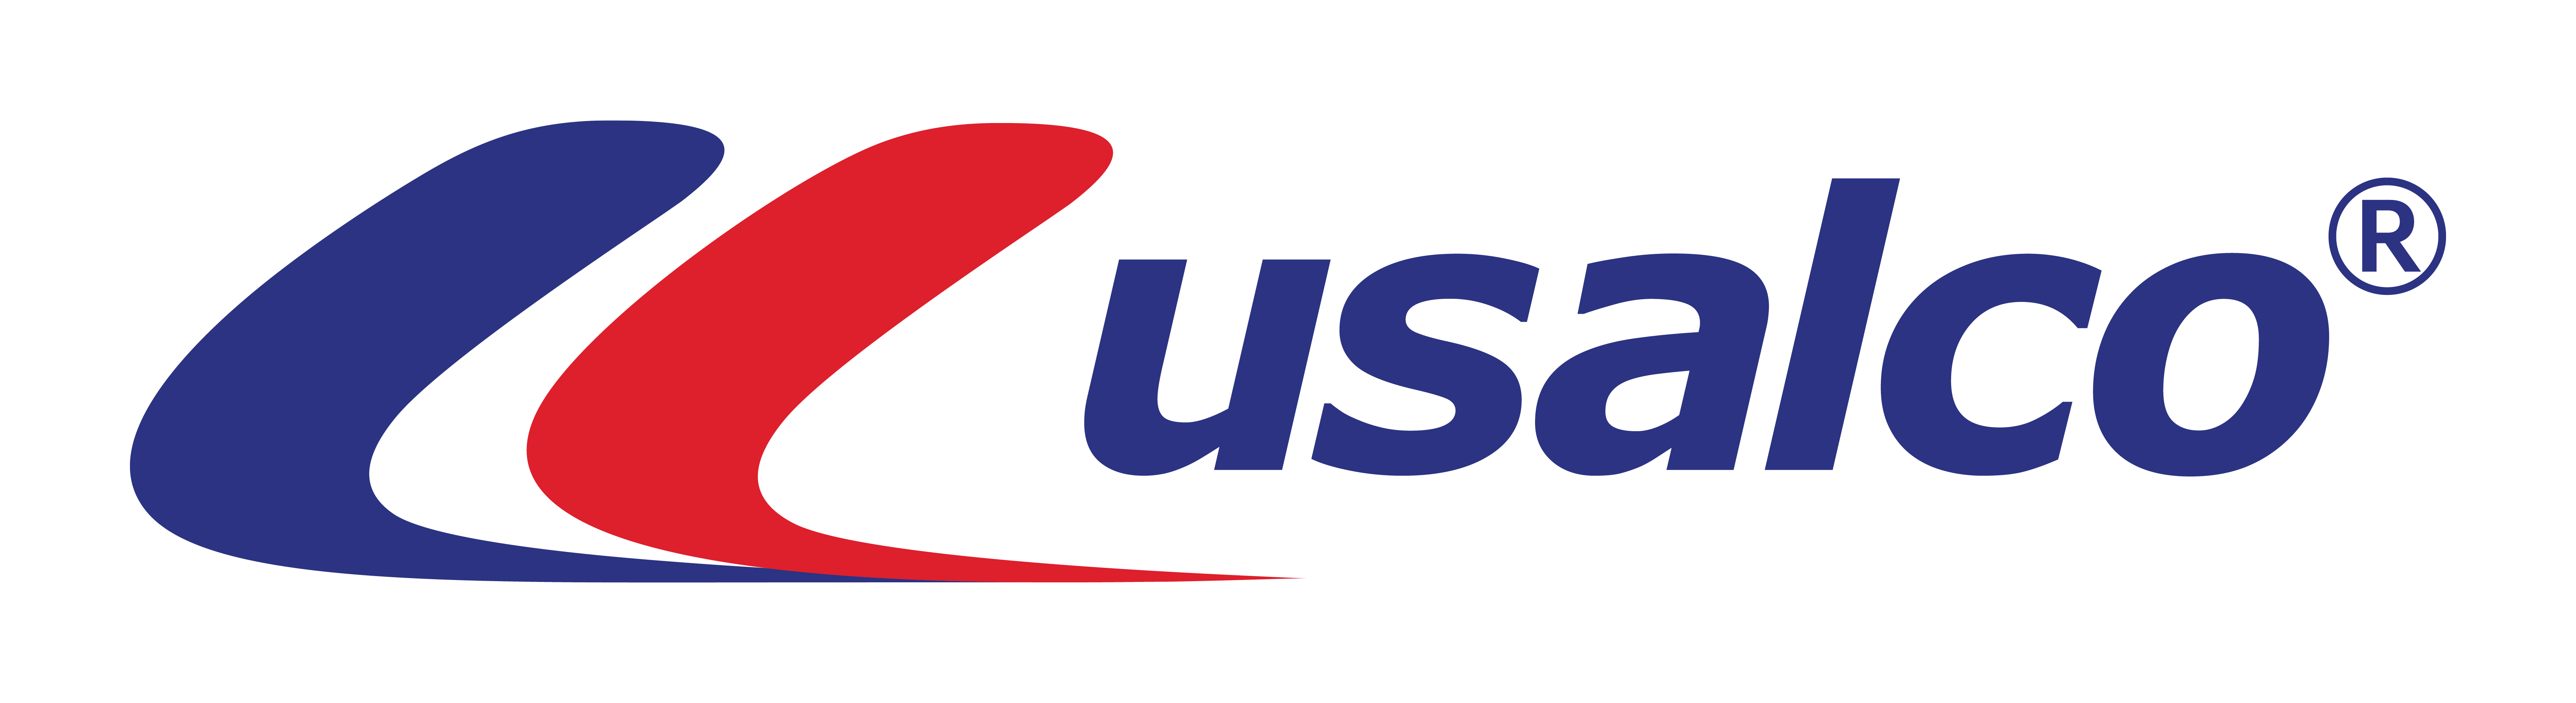 USALCO Logo - USALCO